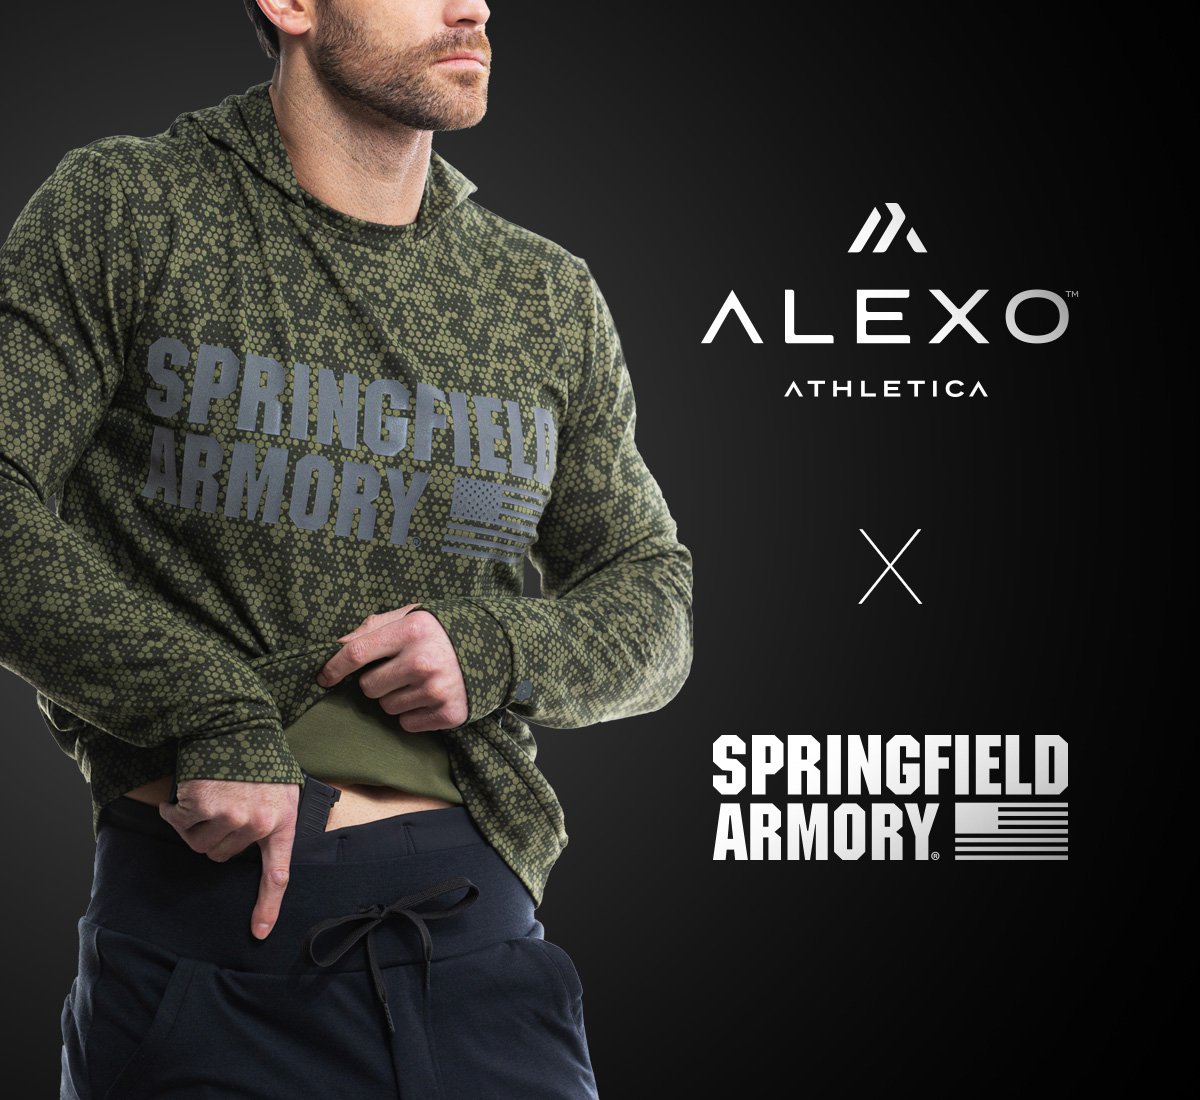 Alexo Athletica x Springfield Armory Readywear